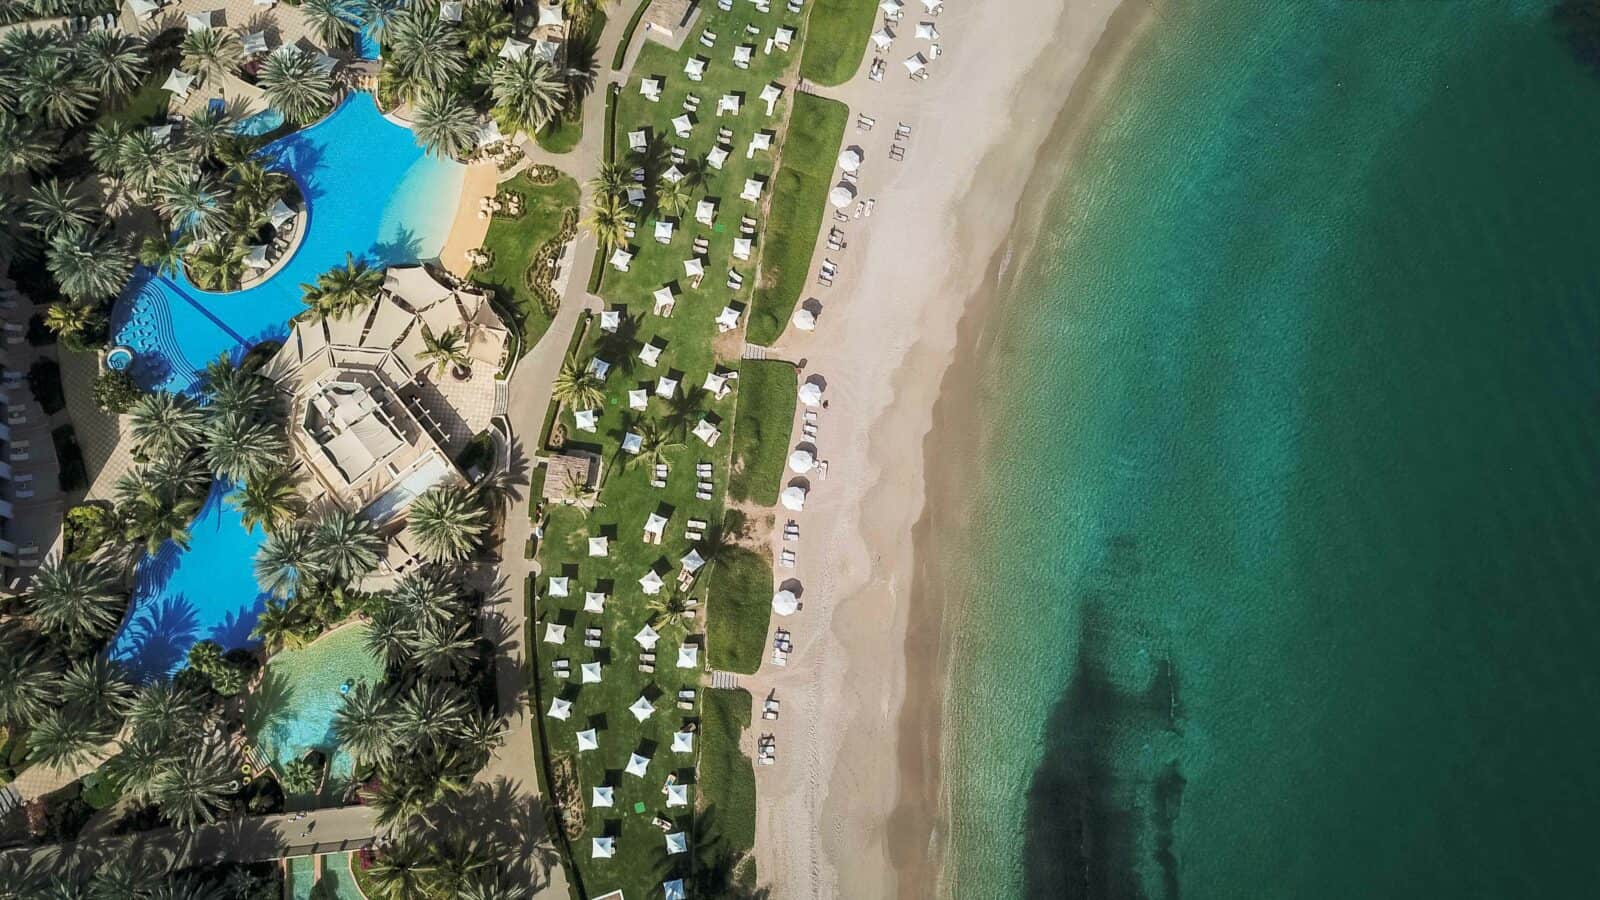 Shangri-La Barr al Jissah Resort Oman